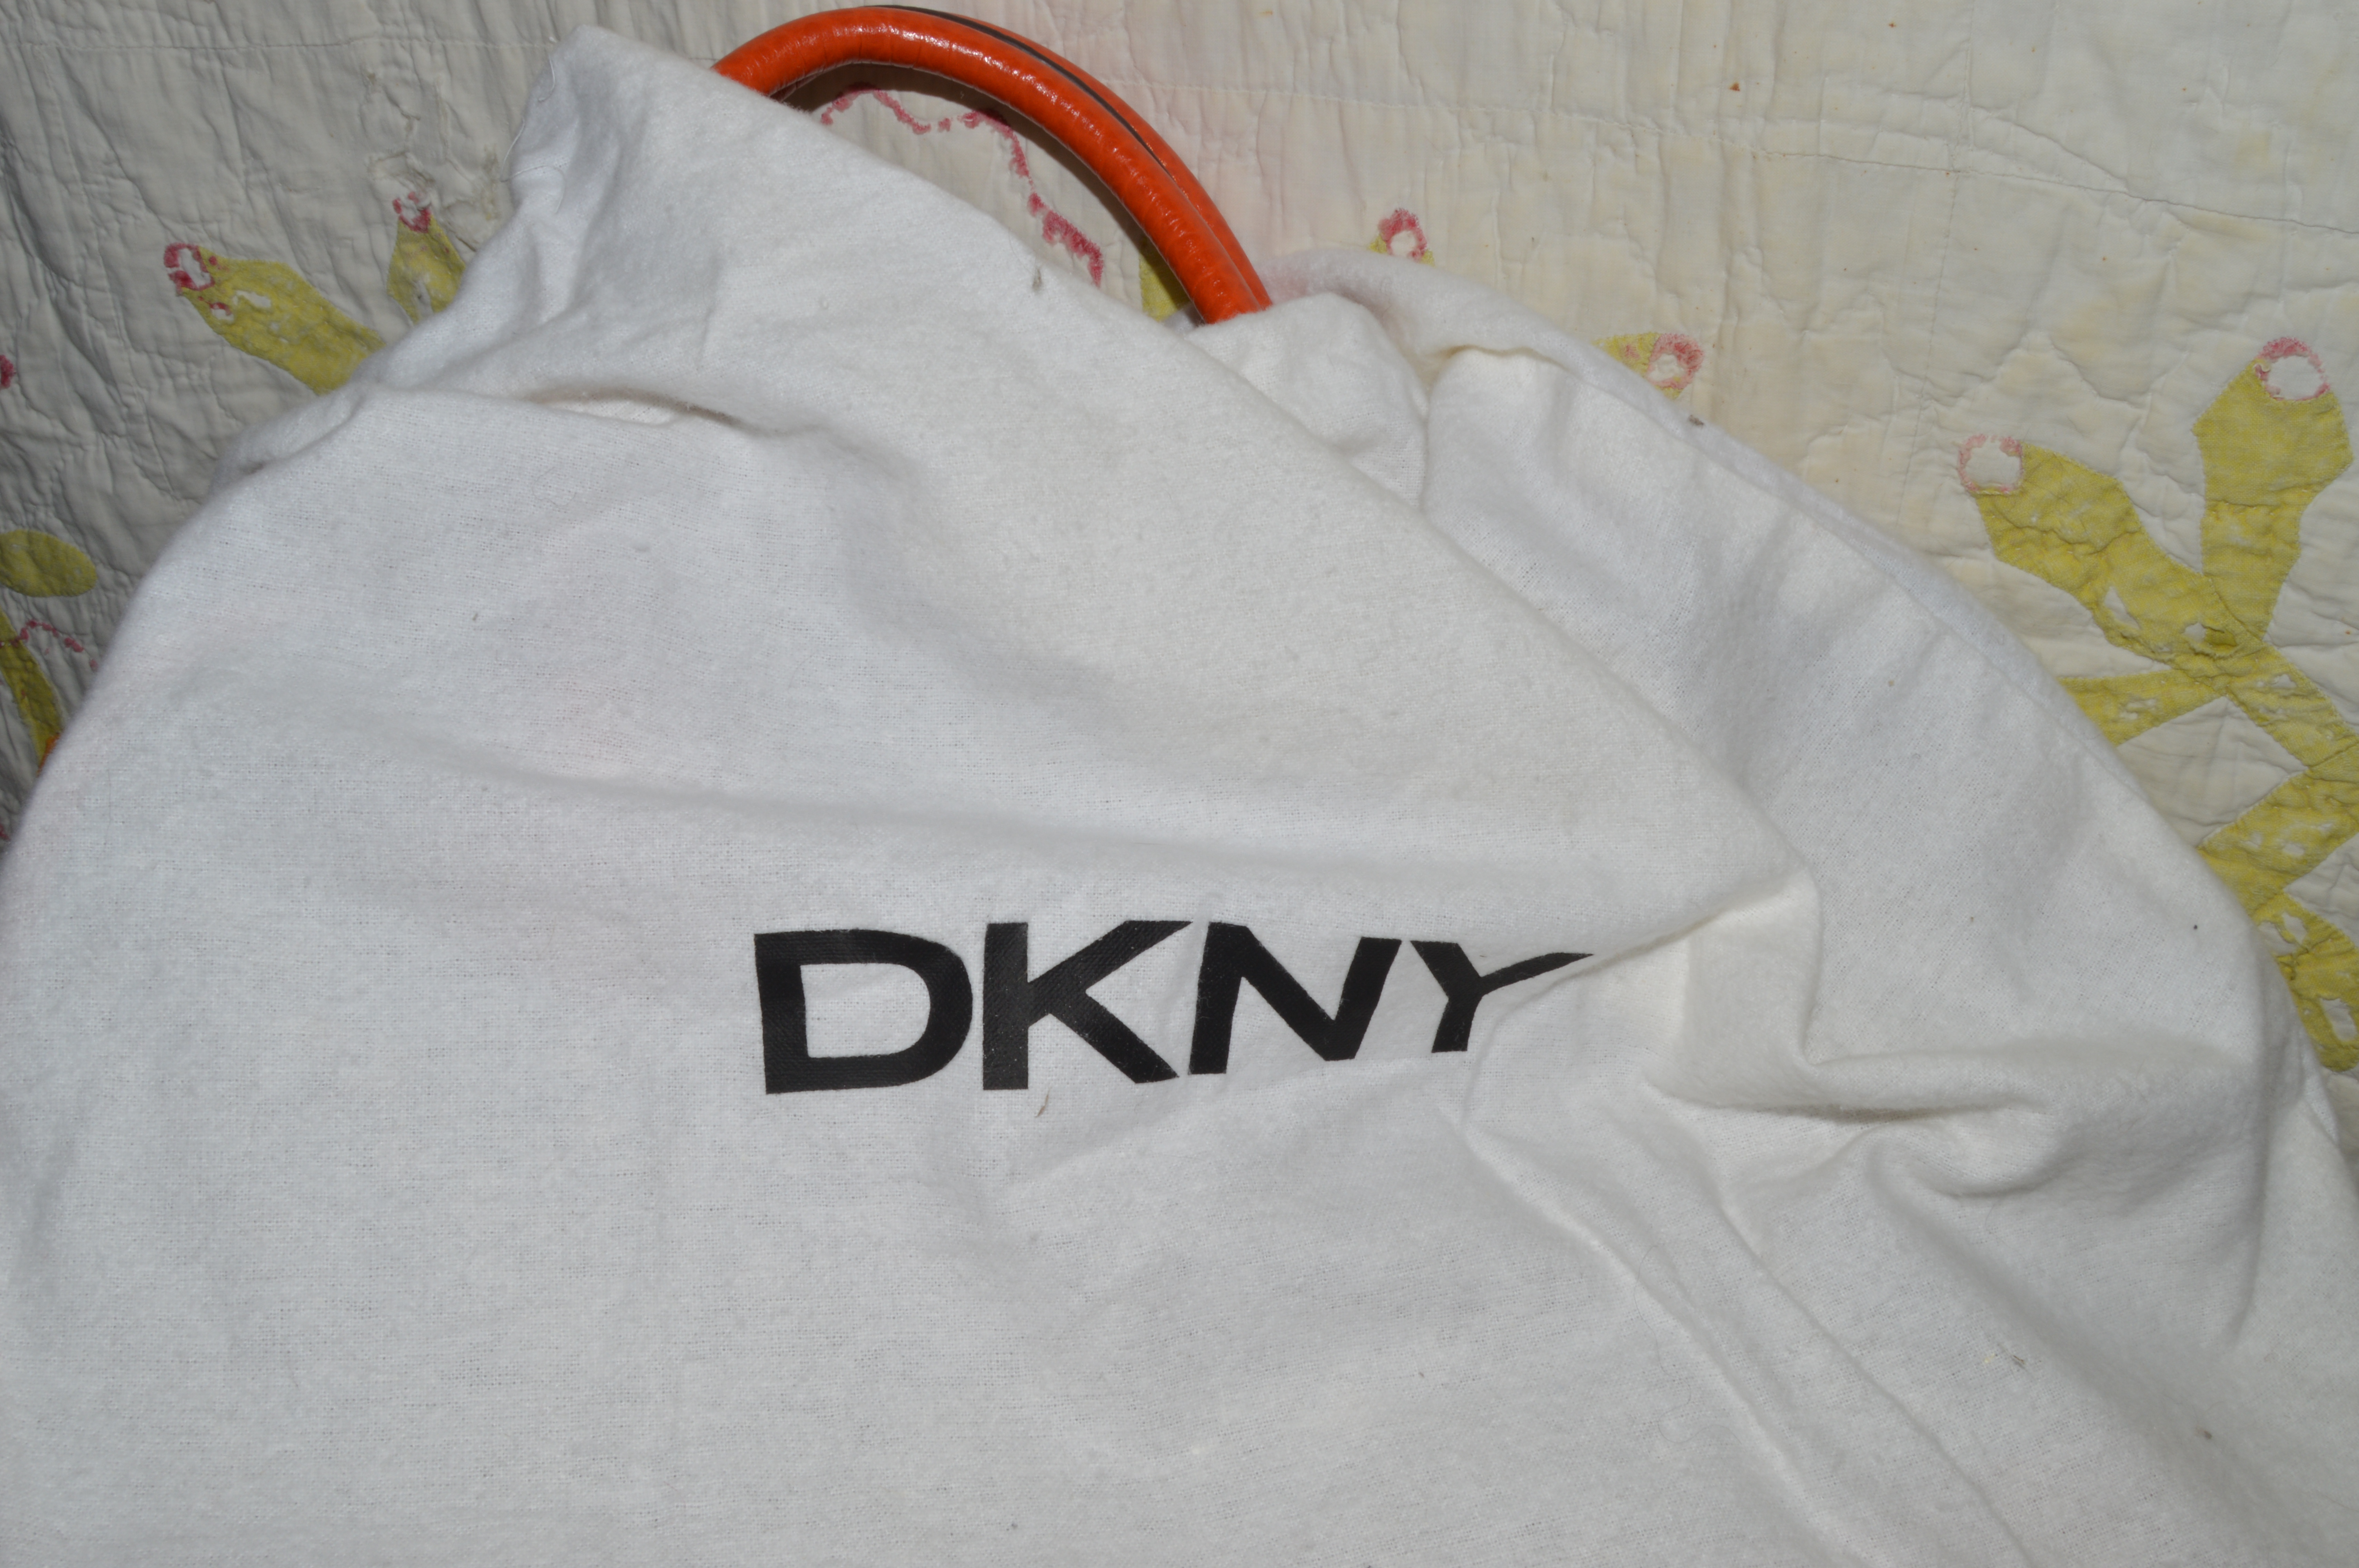 DKNY Monogram Tote with Sleeper Bag 